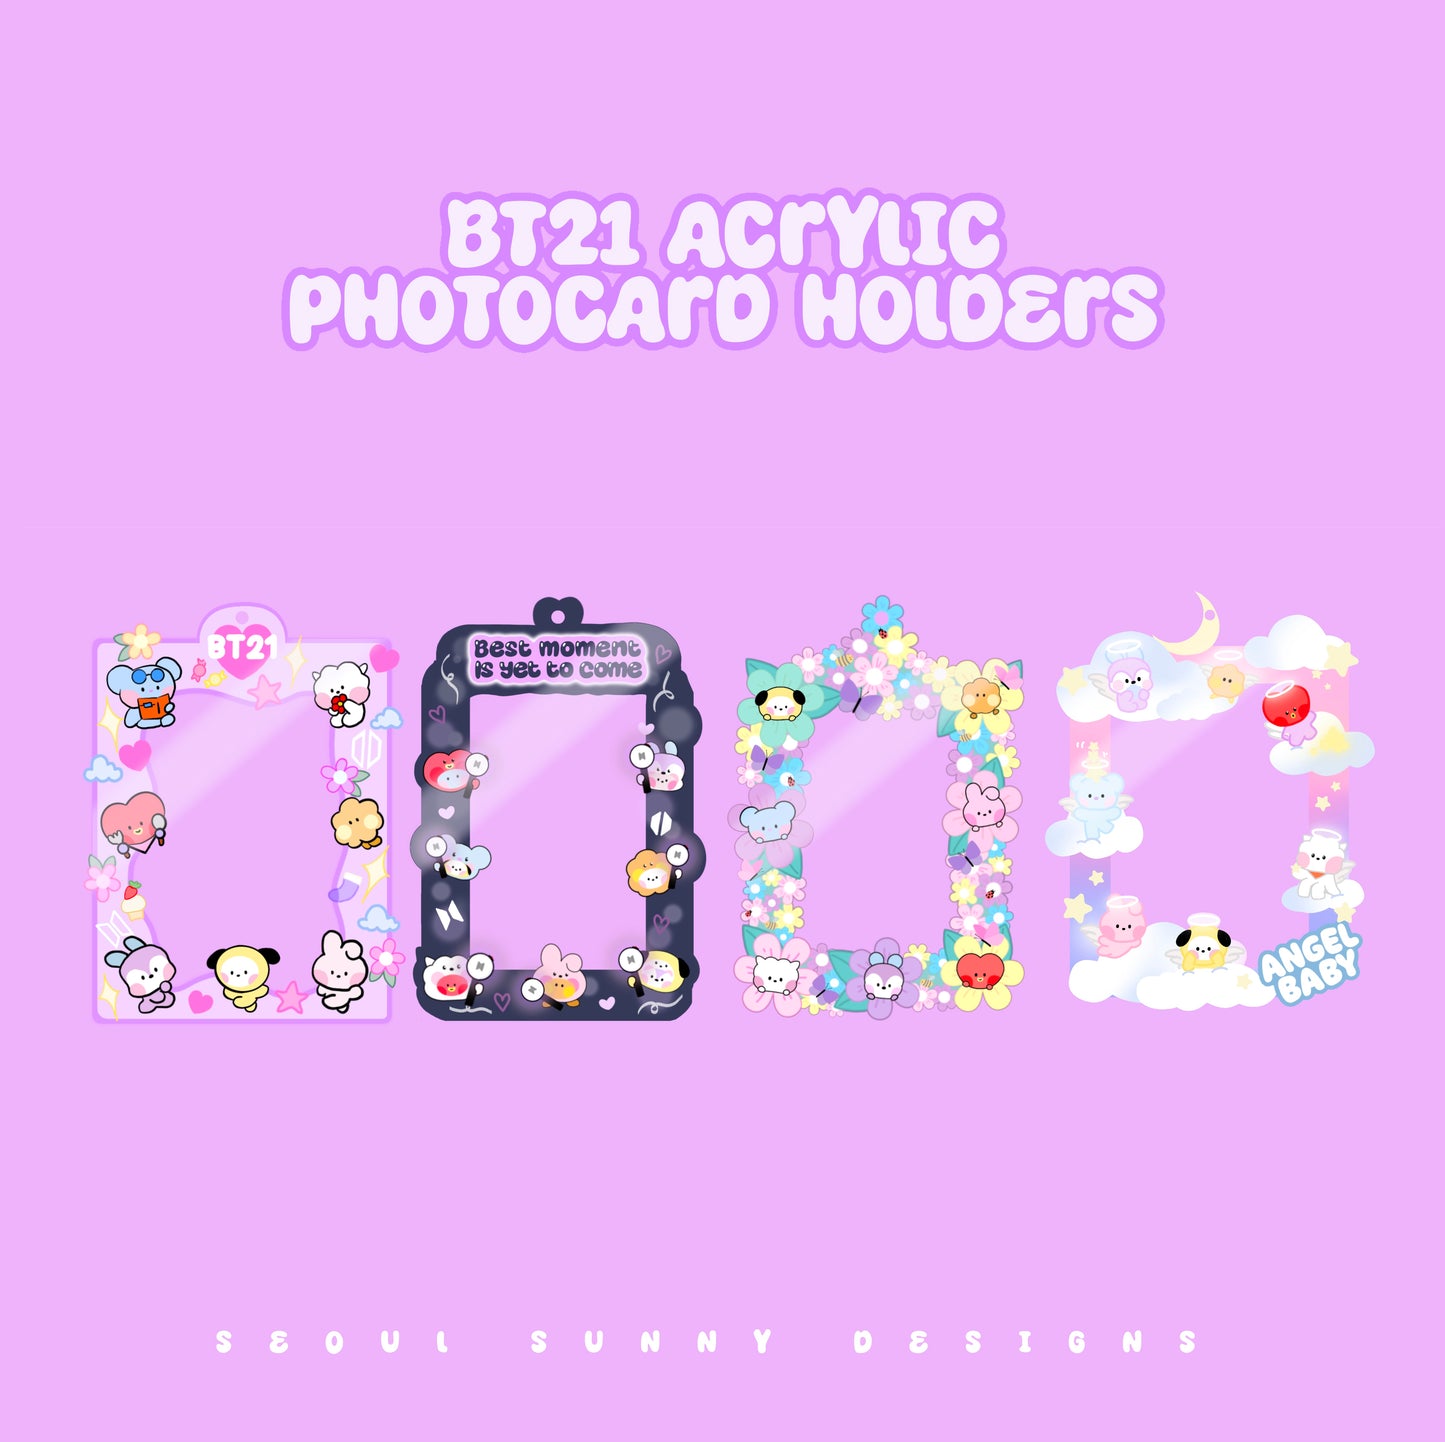 Seoul Sunny Designs Acrylic Photo card Holders